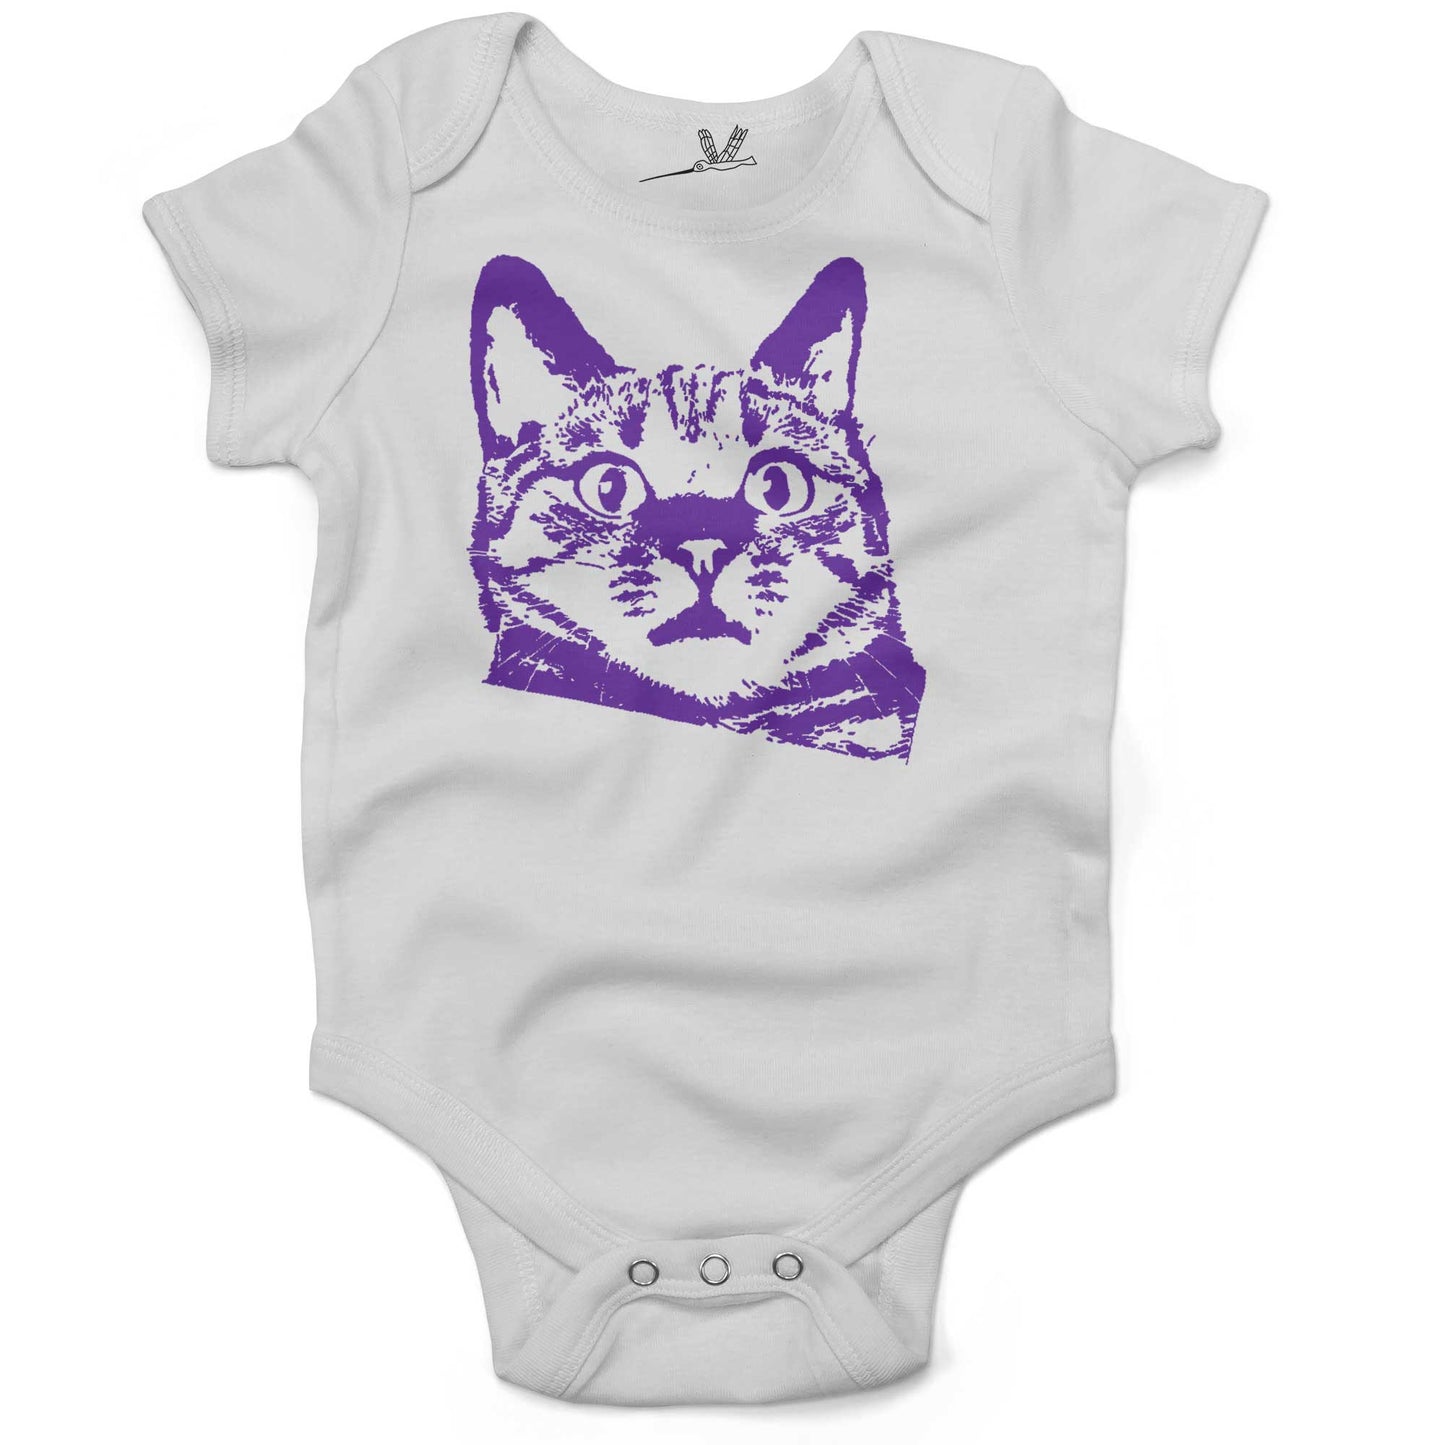 Funny Cat Infant Bodysuit or Raglan Baby Tee-White-3-6 months